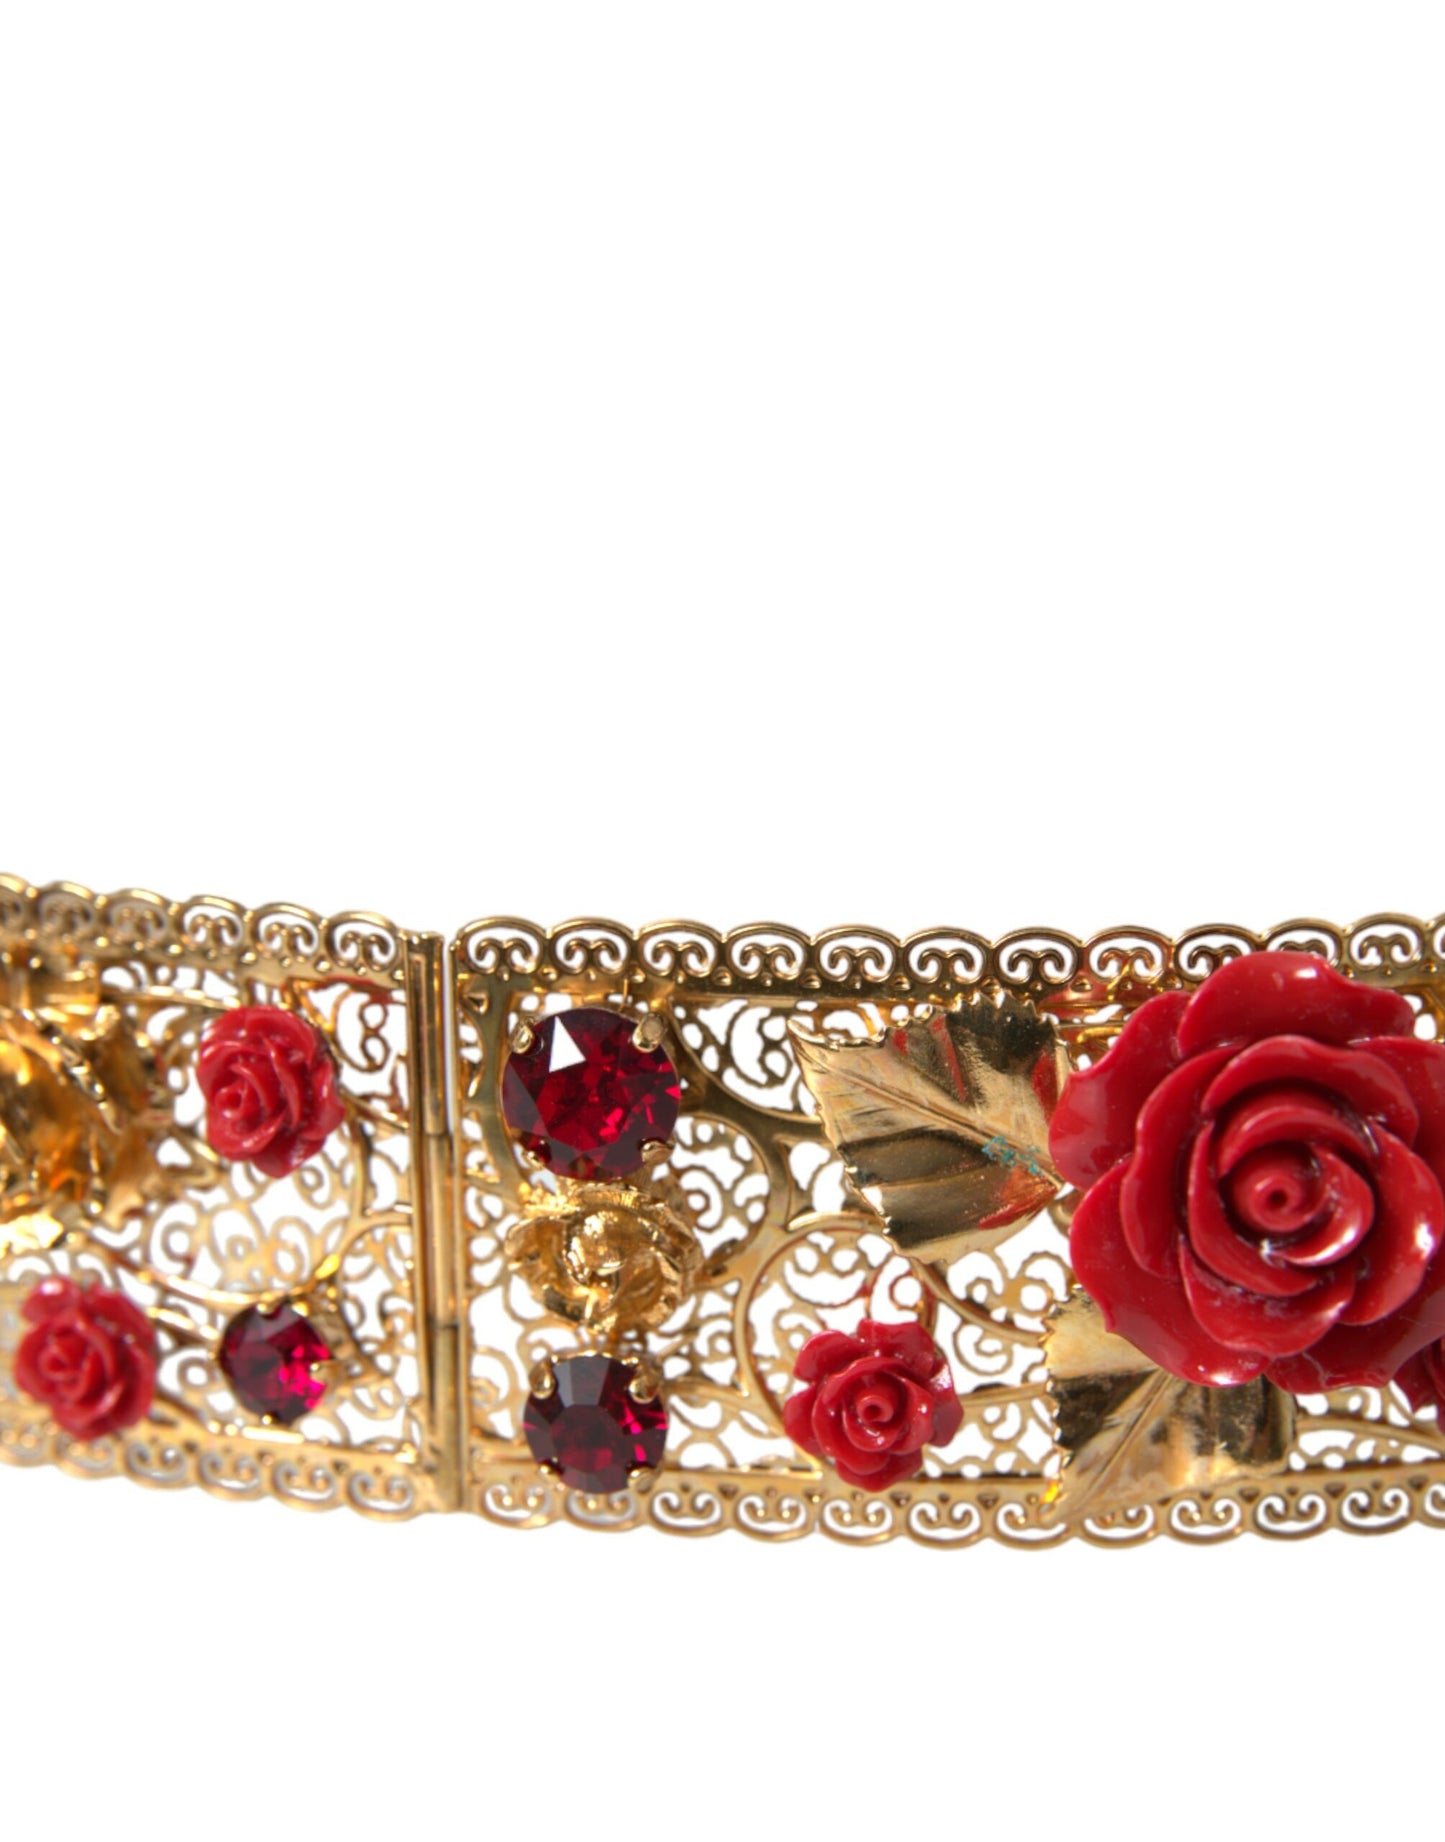 Gold Brass Red Roses Crystal Jewel Waist Belt